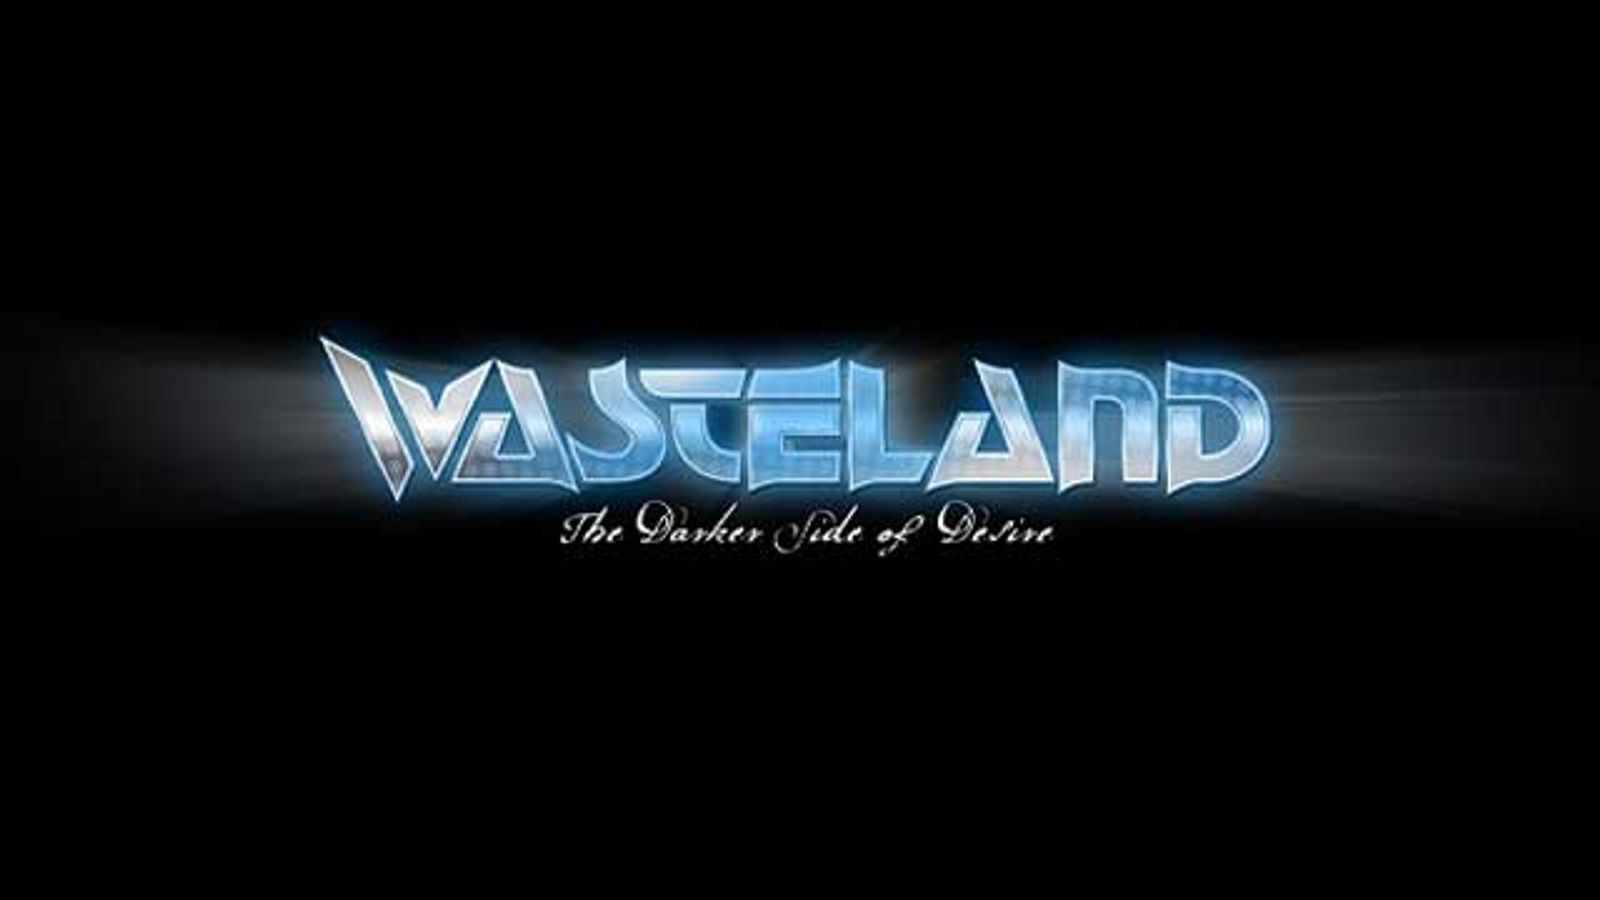 Wasteland.com Up for Favorite Adult Website at The Sex Awards